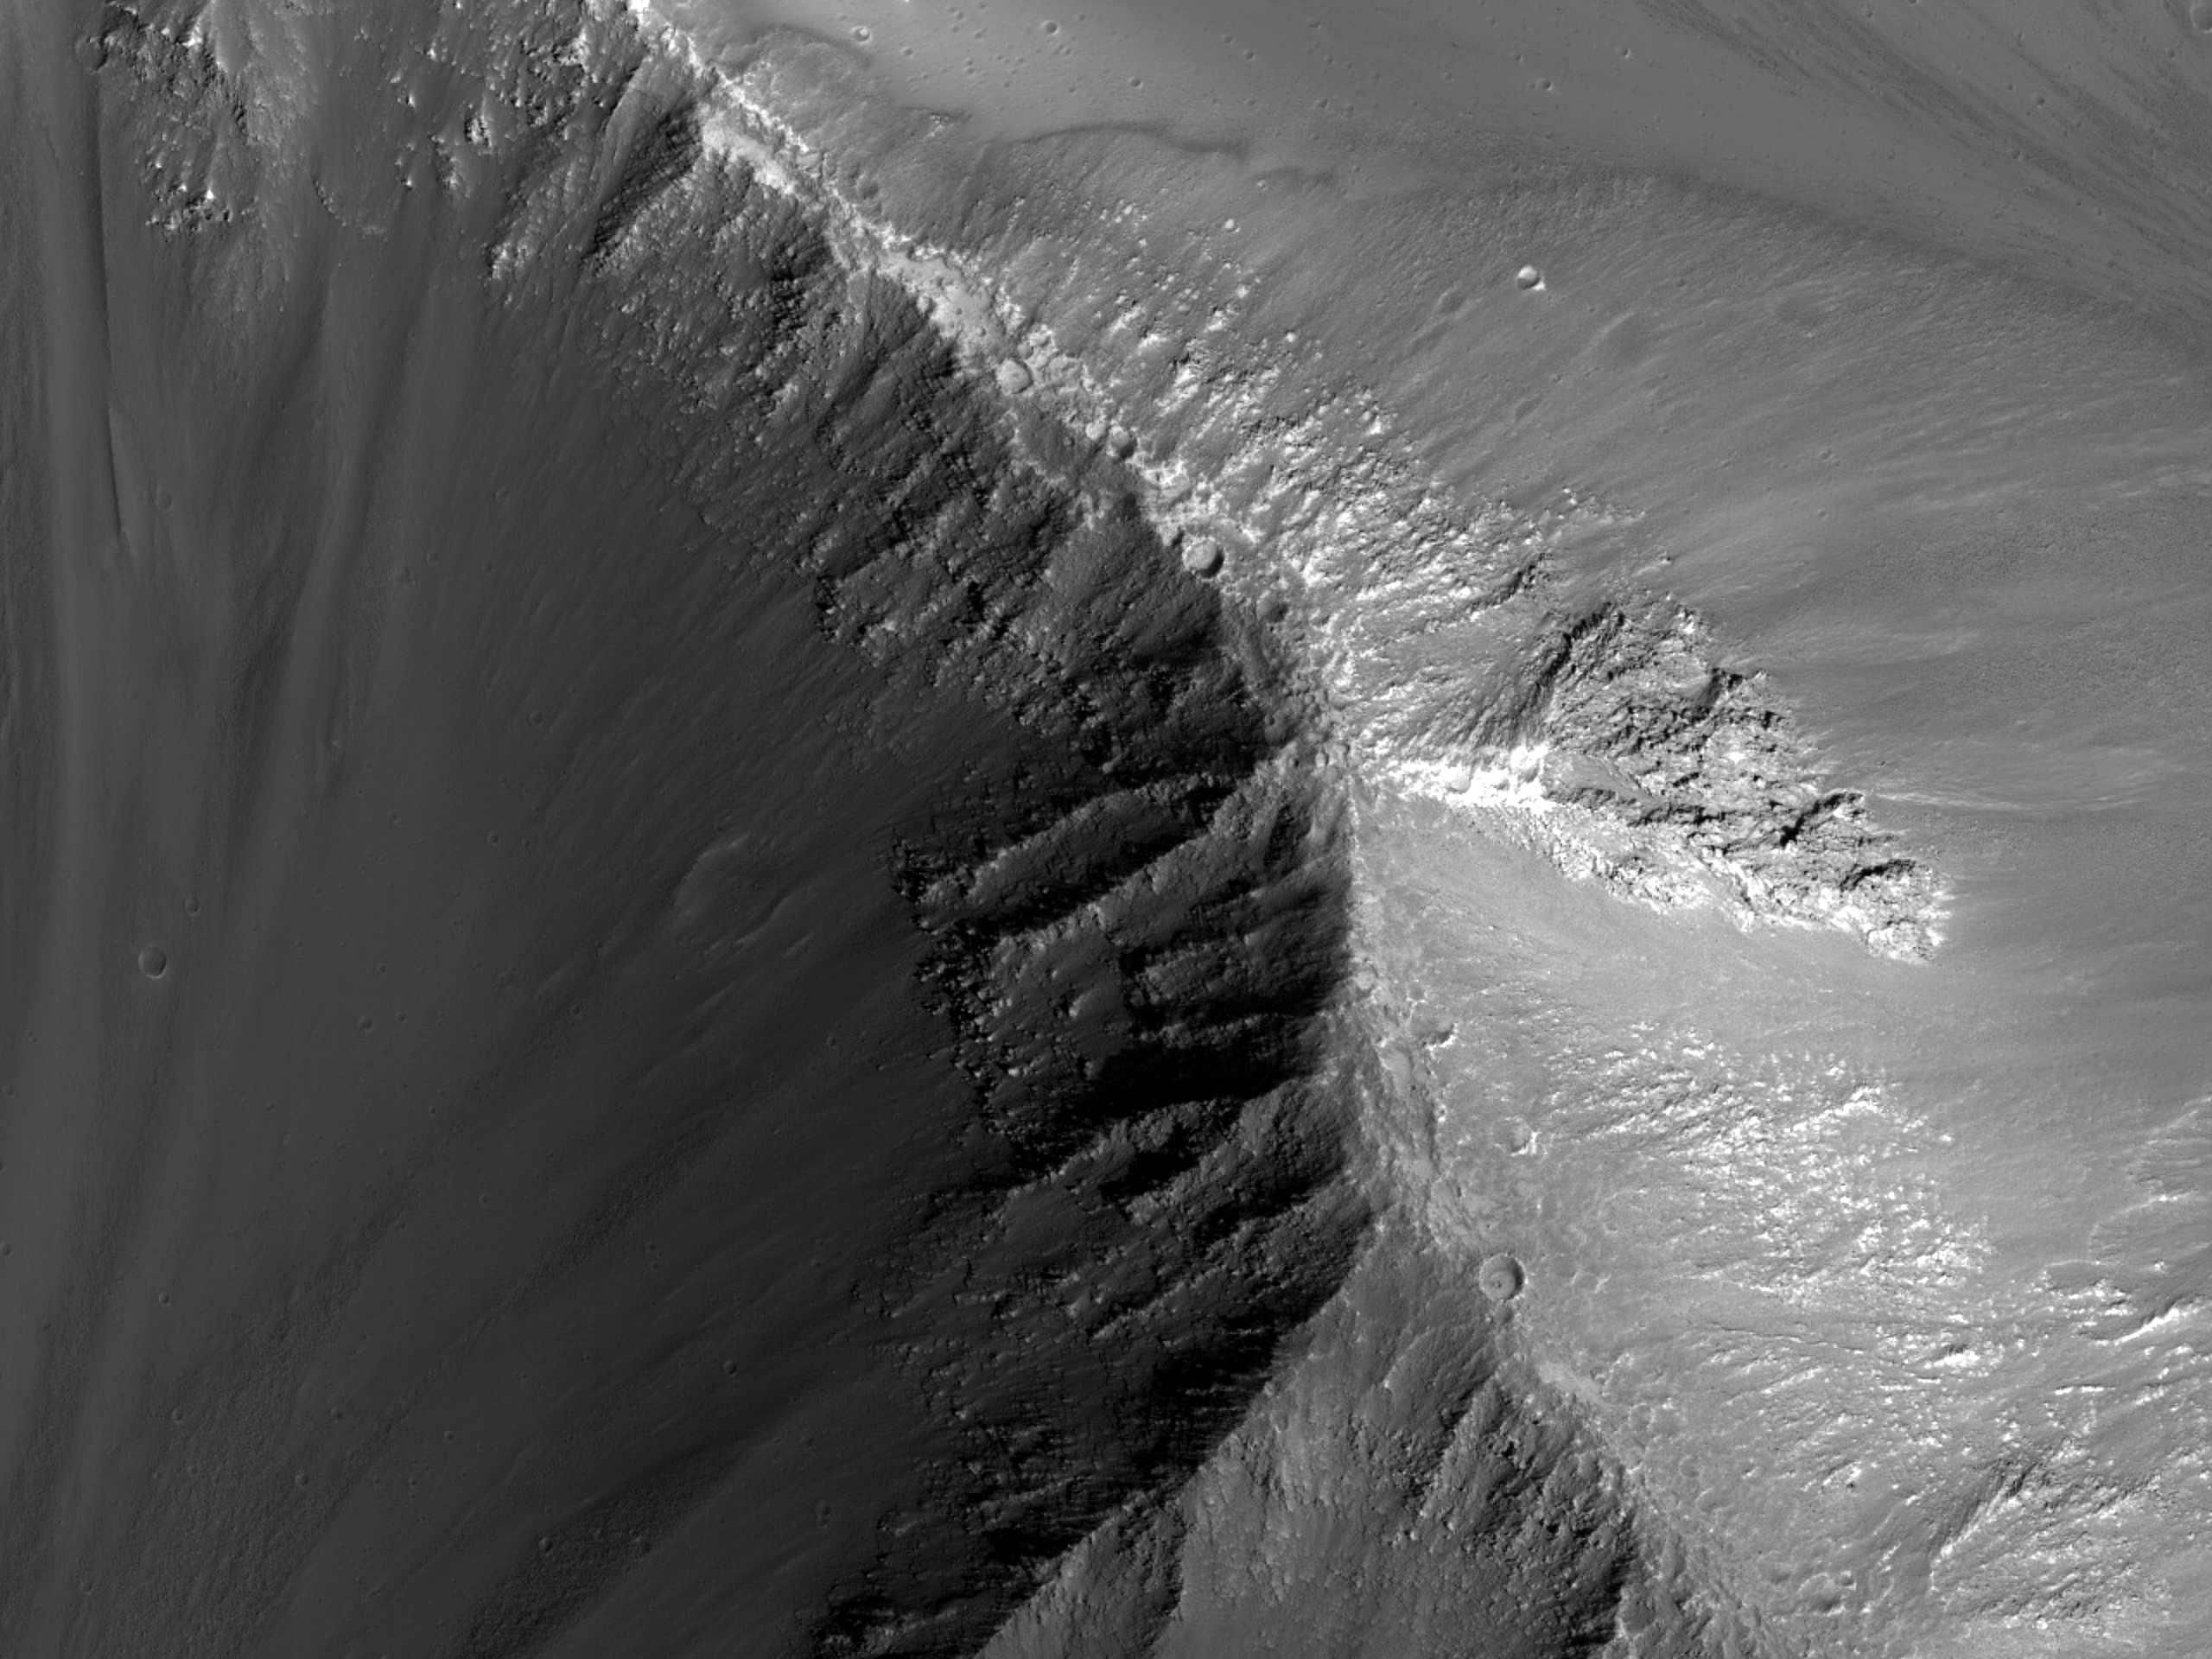 Entlang eines Bergrckens in Tithonium Chasma